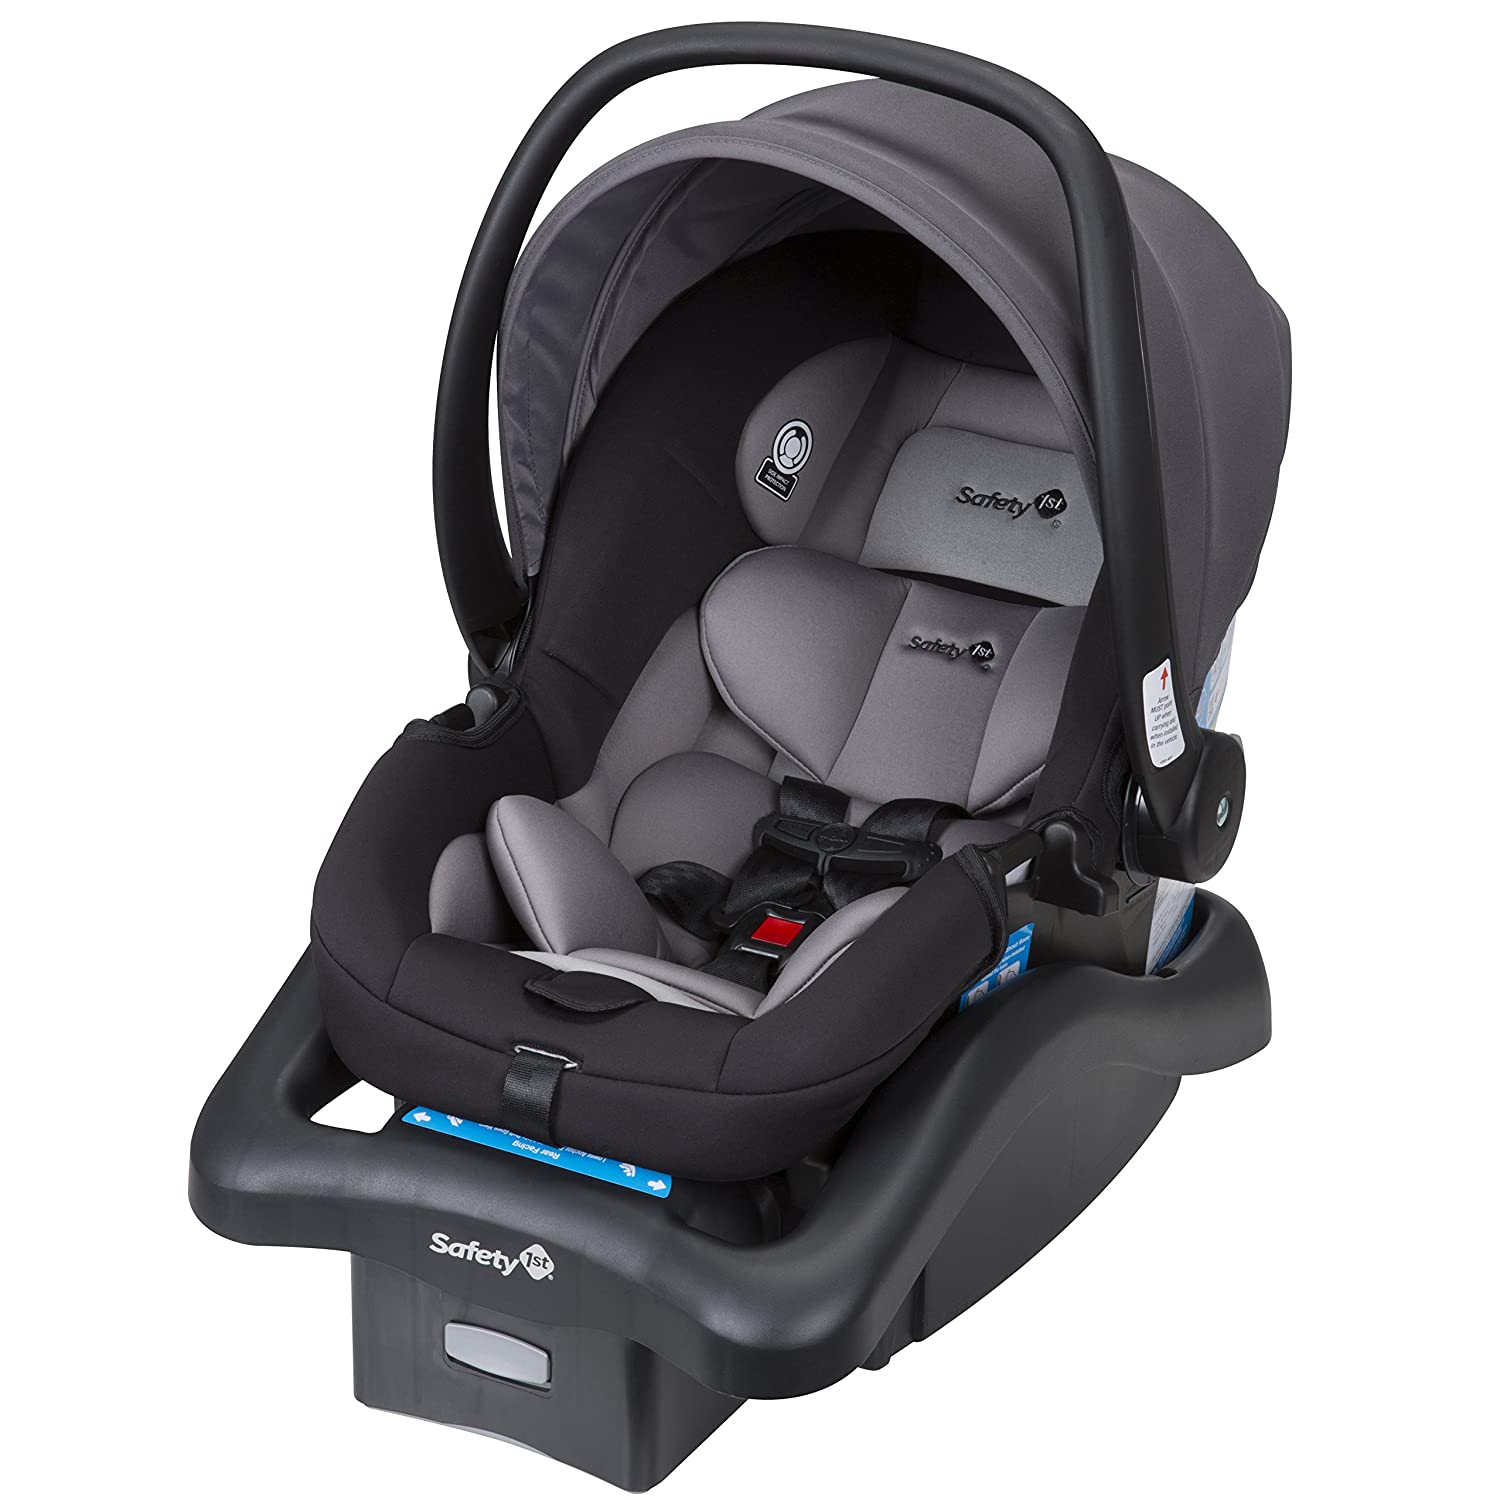  9. 35 LT Infant Car Seat, Brand Safety 1st, Monument Color 